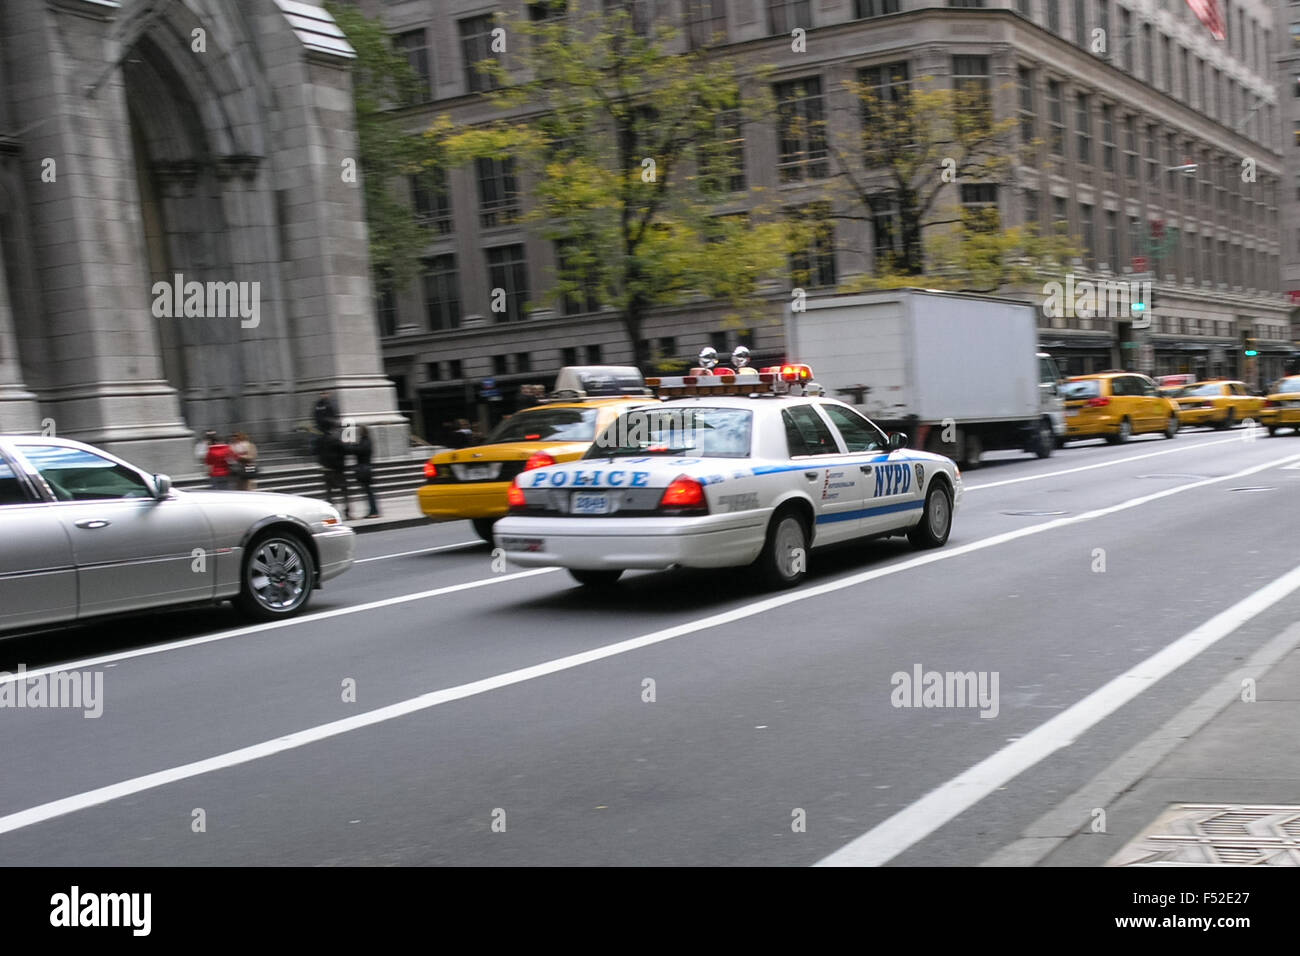 NYPD police car, New York, USA Stock Photo